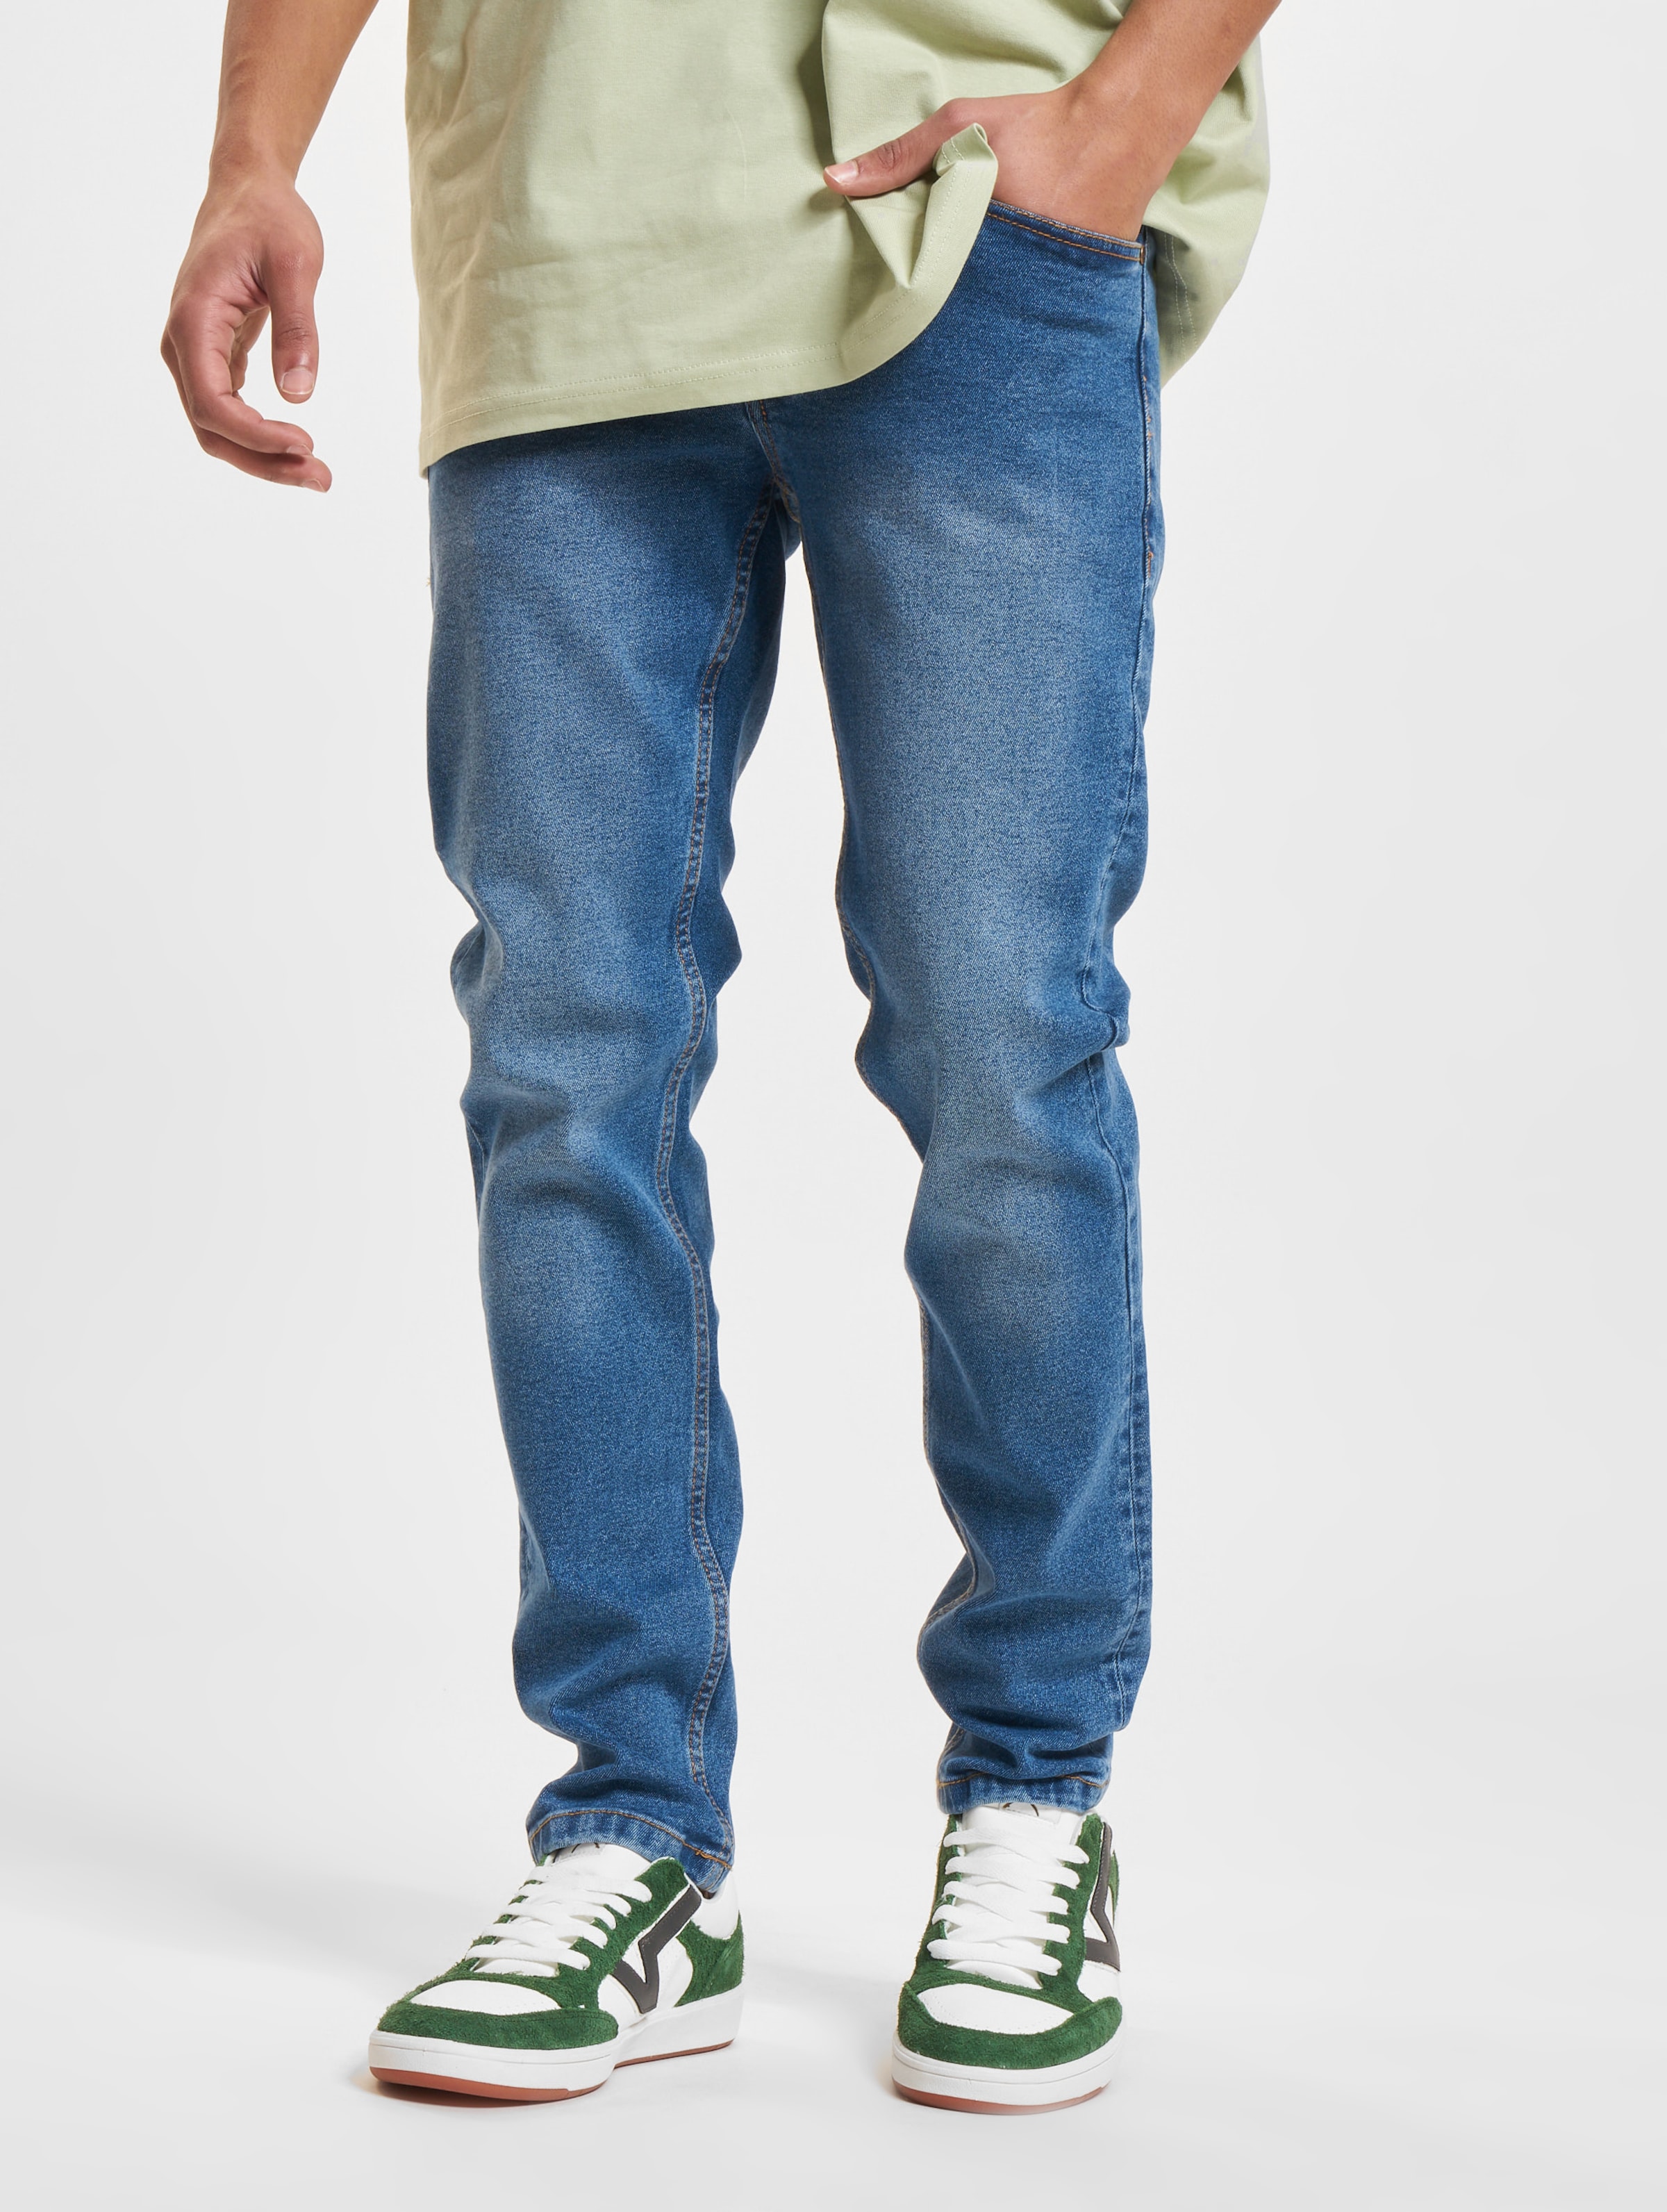 Denim Project Mr. Red Skinny Fit Jeans Mannen op kleur blauw, Maat 3232